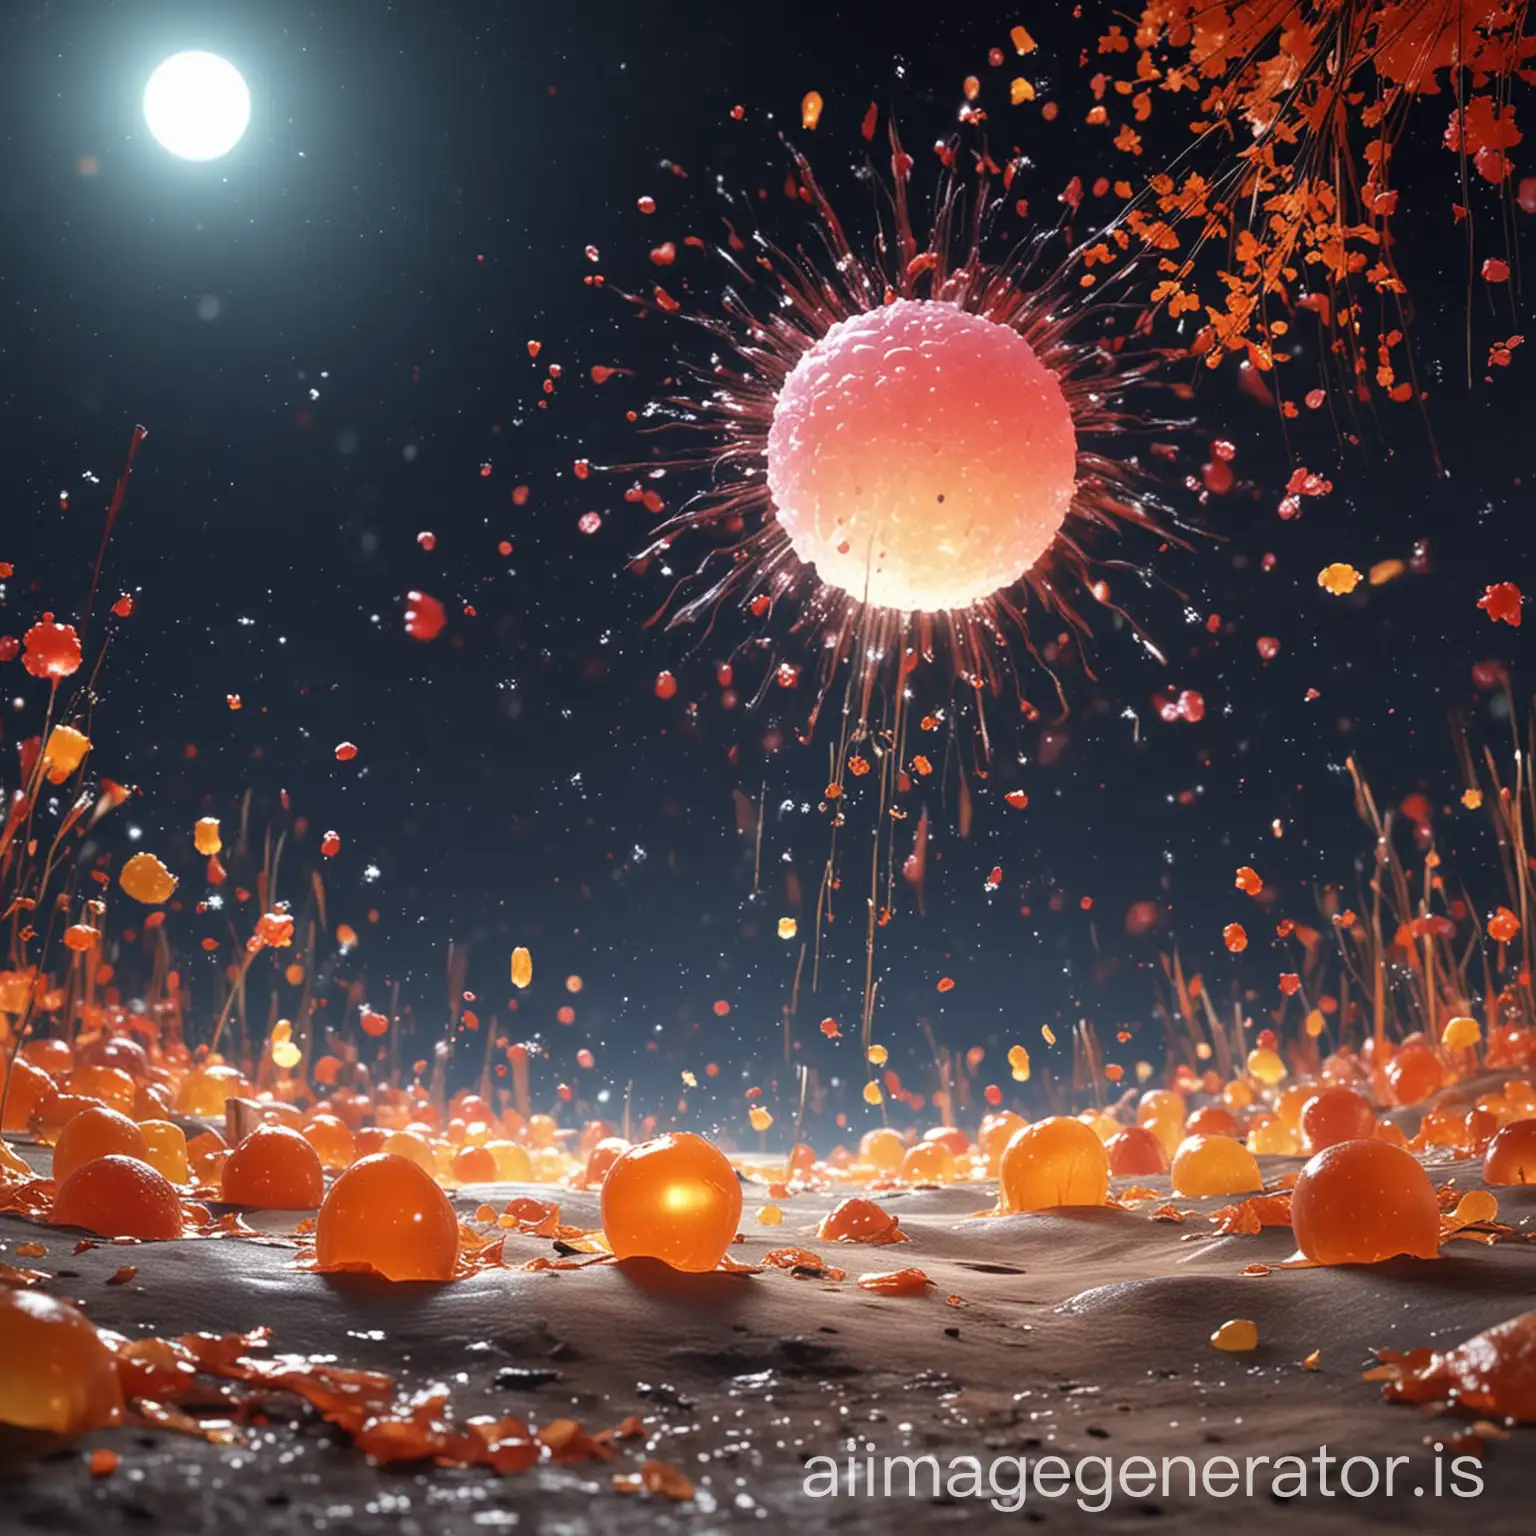 Vibrant-MidAutumn-Festival-Scene-with-Moon-Fireworks-and-Animated-3D-Feel